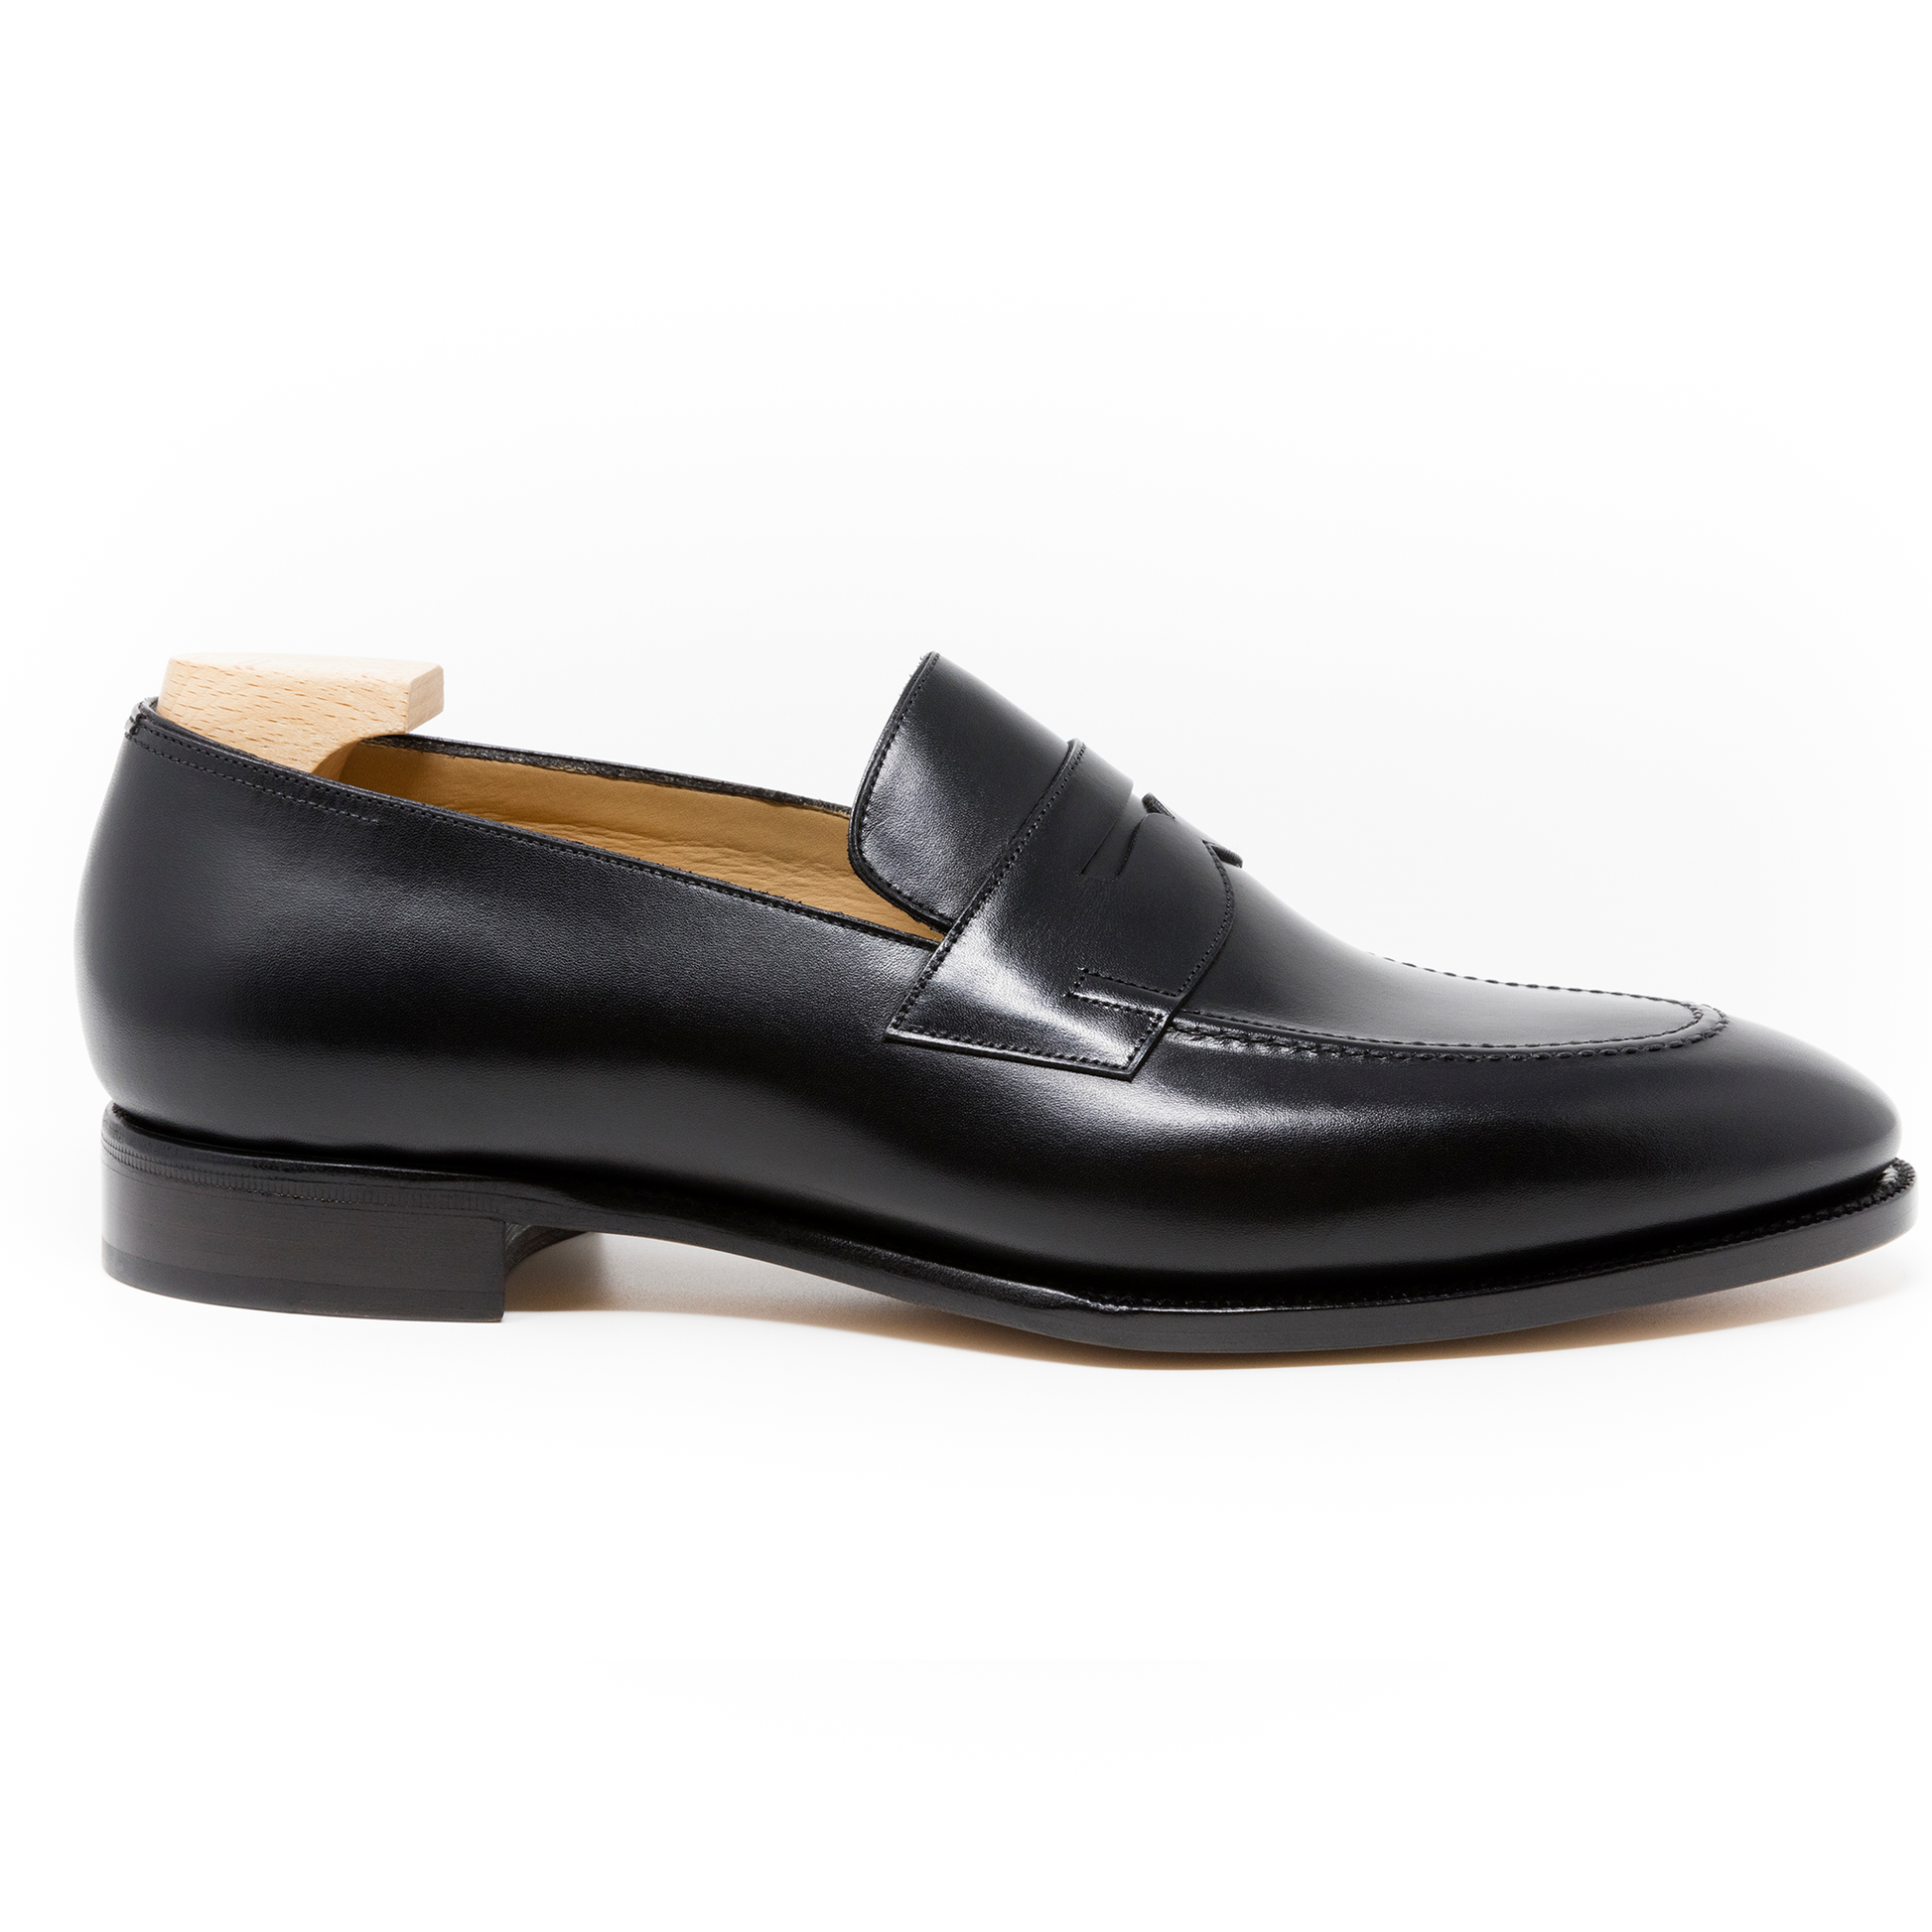 TLB Mallorca leather shoes 117 / GOYA / BOXCALF BLACK